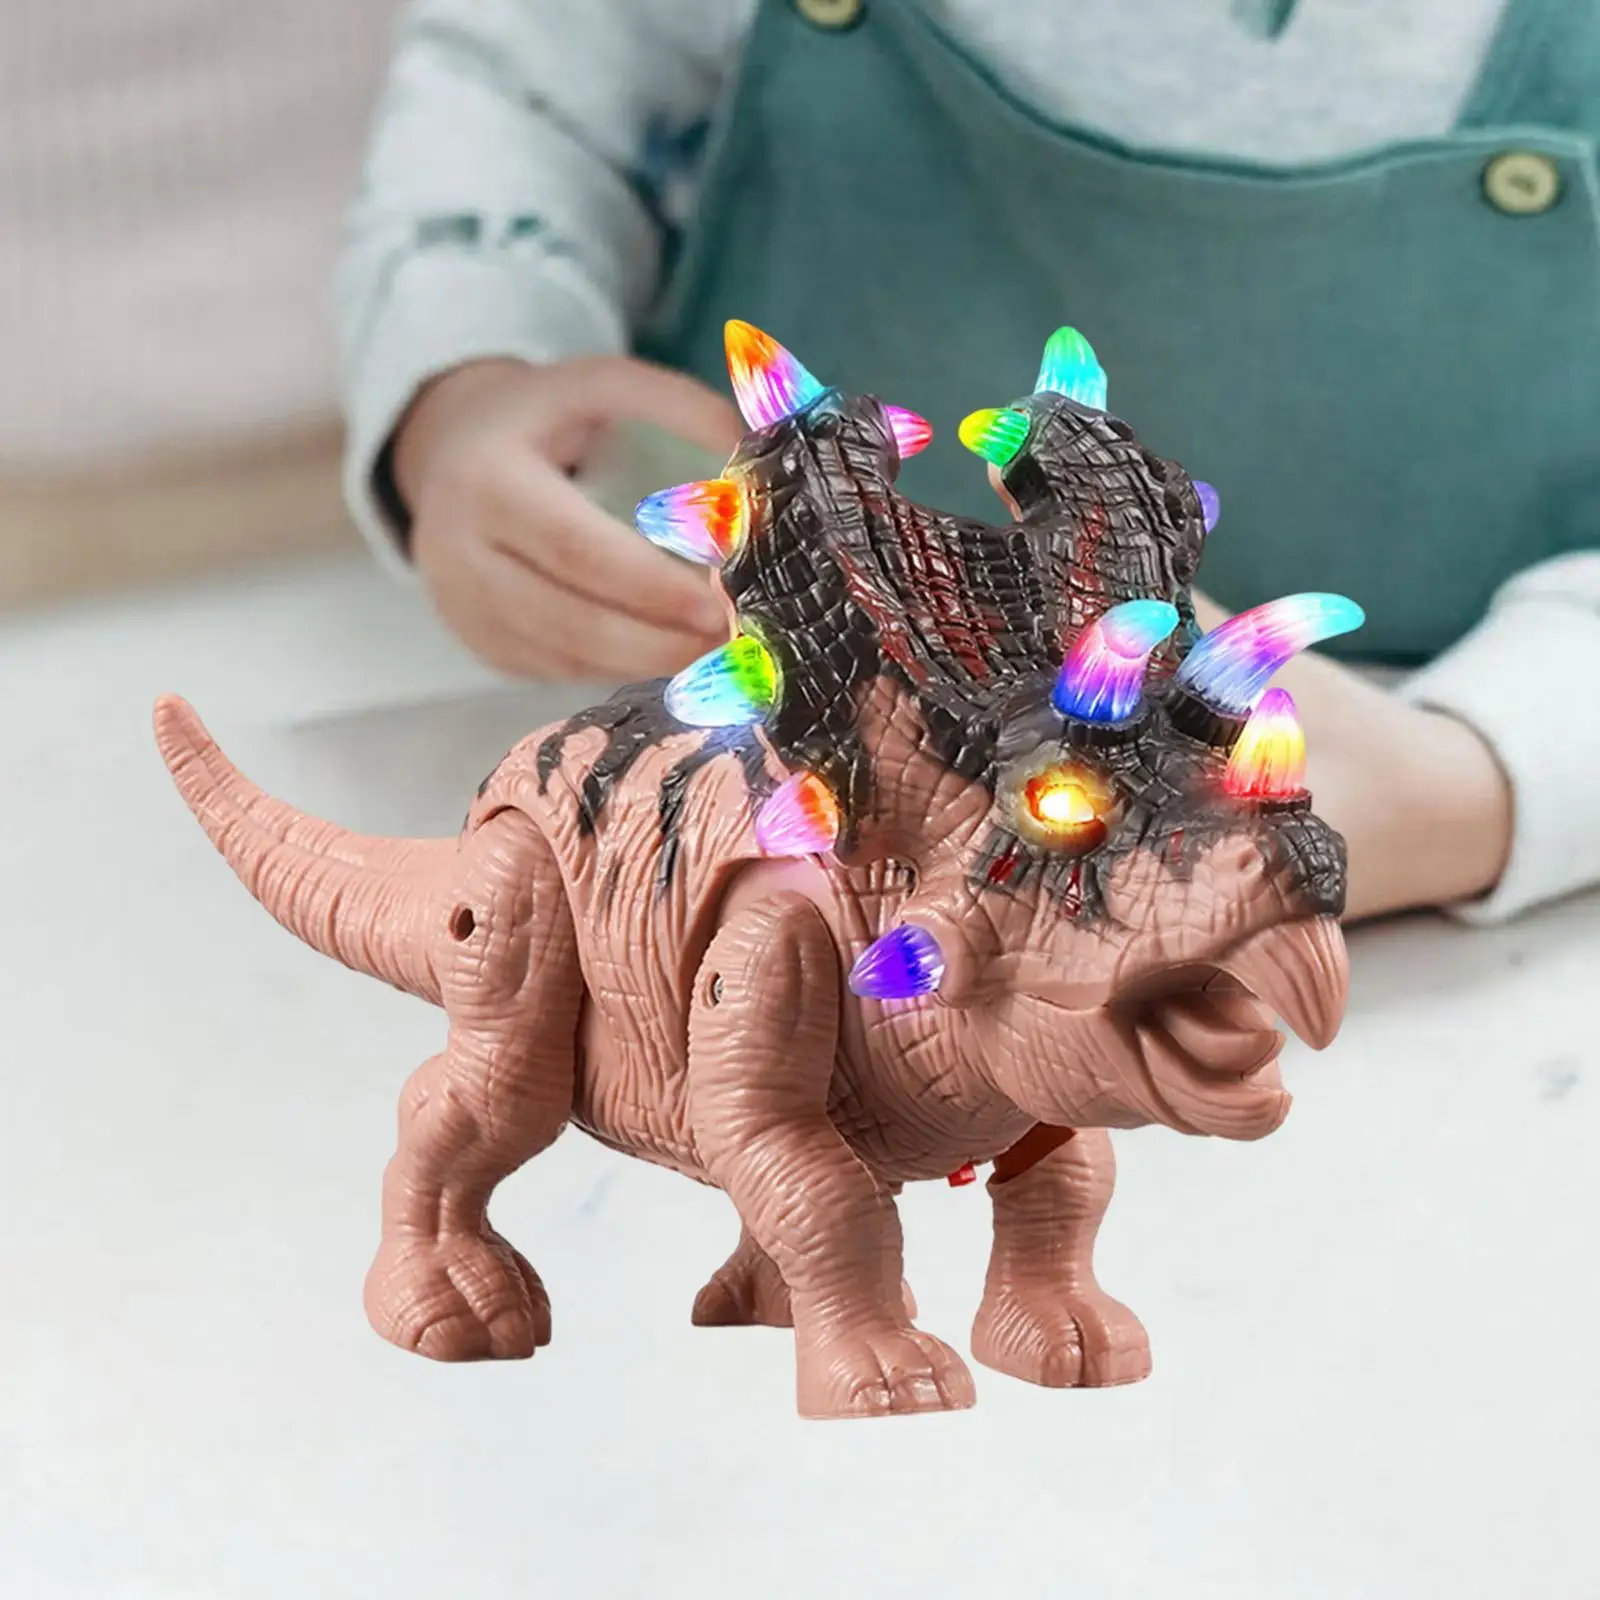 Simulation Electric Walking   Dinosaur Figure for Girls Birthday Gifts